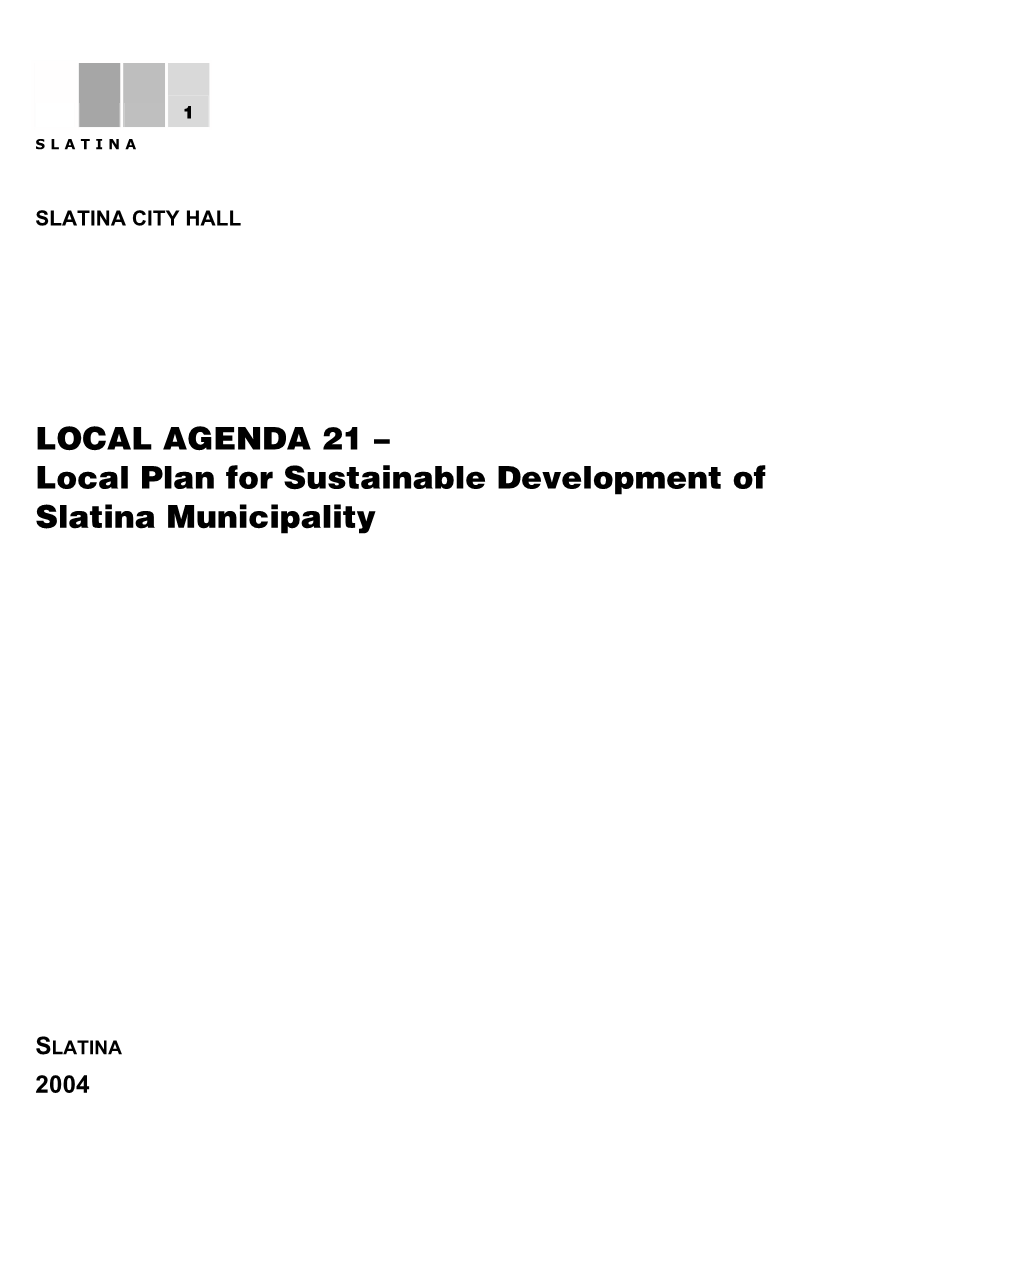 LOCAL AGENDA 21 – Local Plan for Sustainable Development of Slatina Municipality